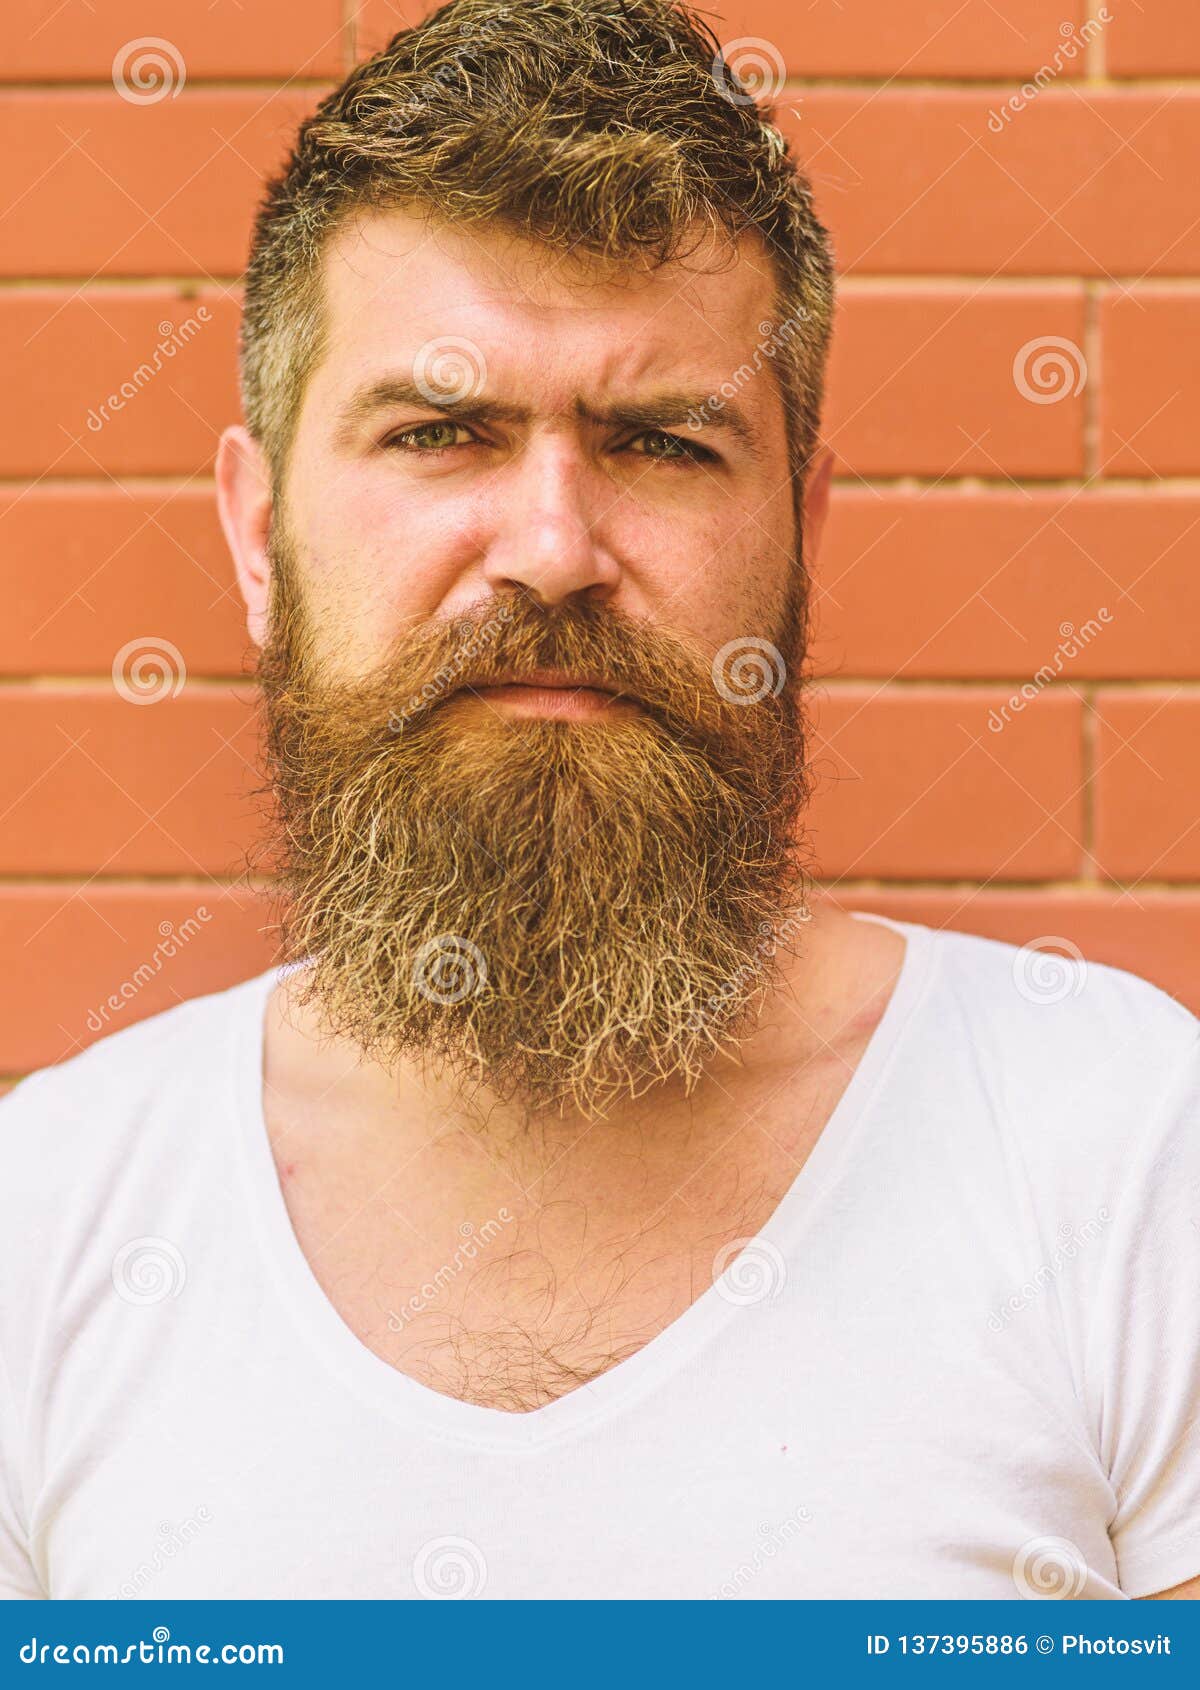 How To Grow Great Beard. Beard Grooming Has Never Been so Easy Stock Photo  - Image of handsome, grooming: 137395886